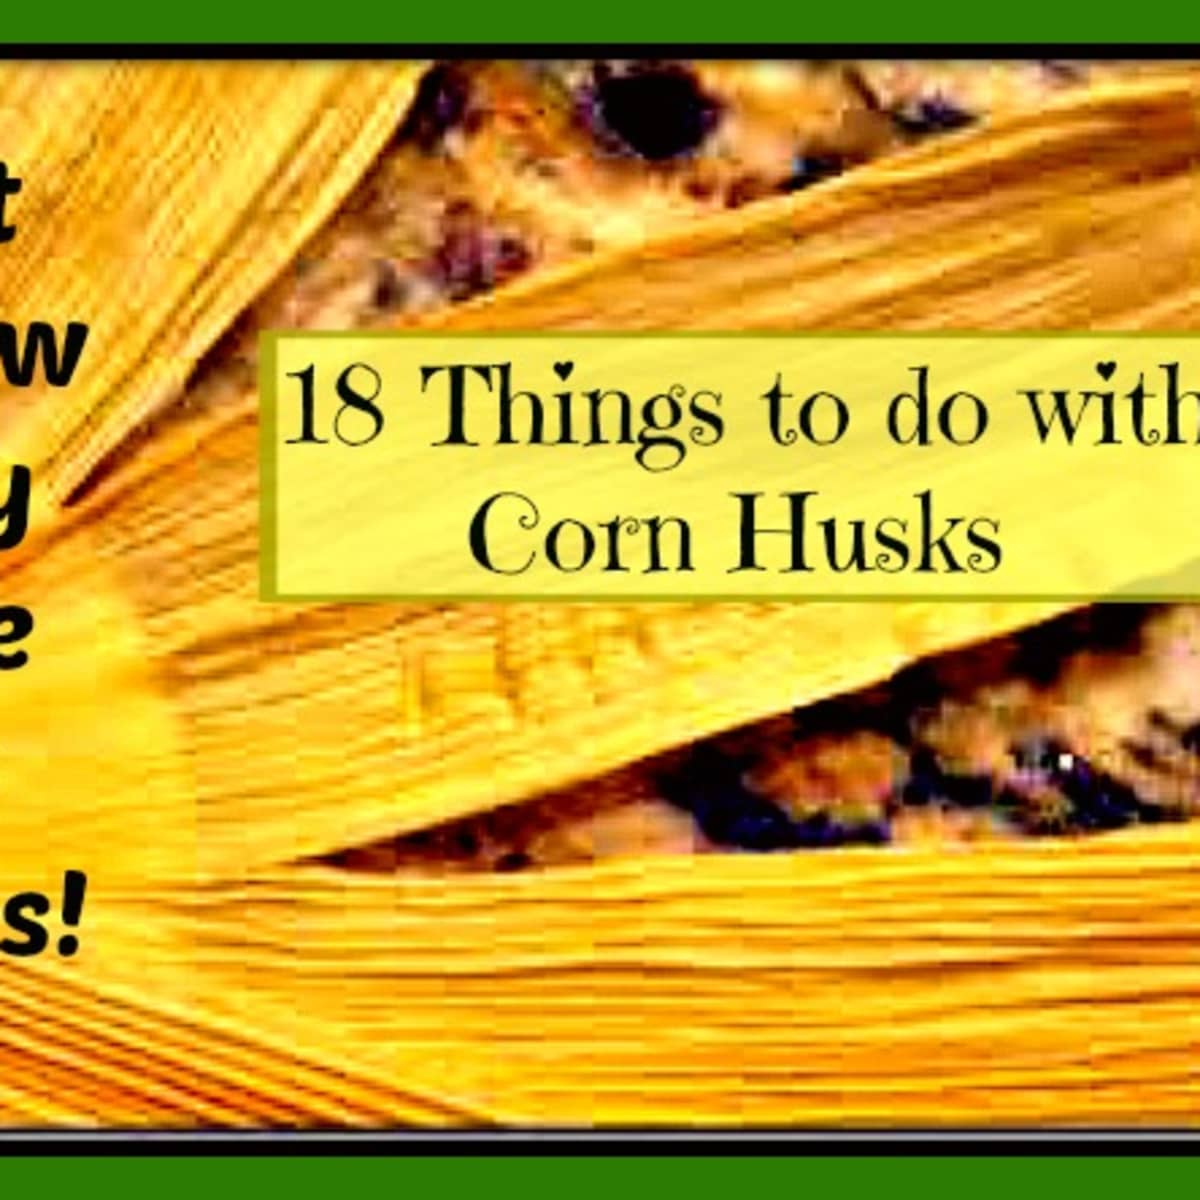 4 Giant Corn Husks - Basket Weaving, Wreaths, Doll Making - My Community  Made